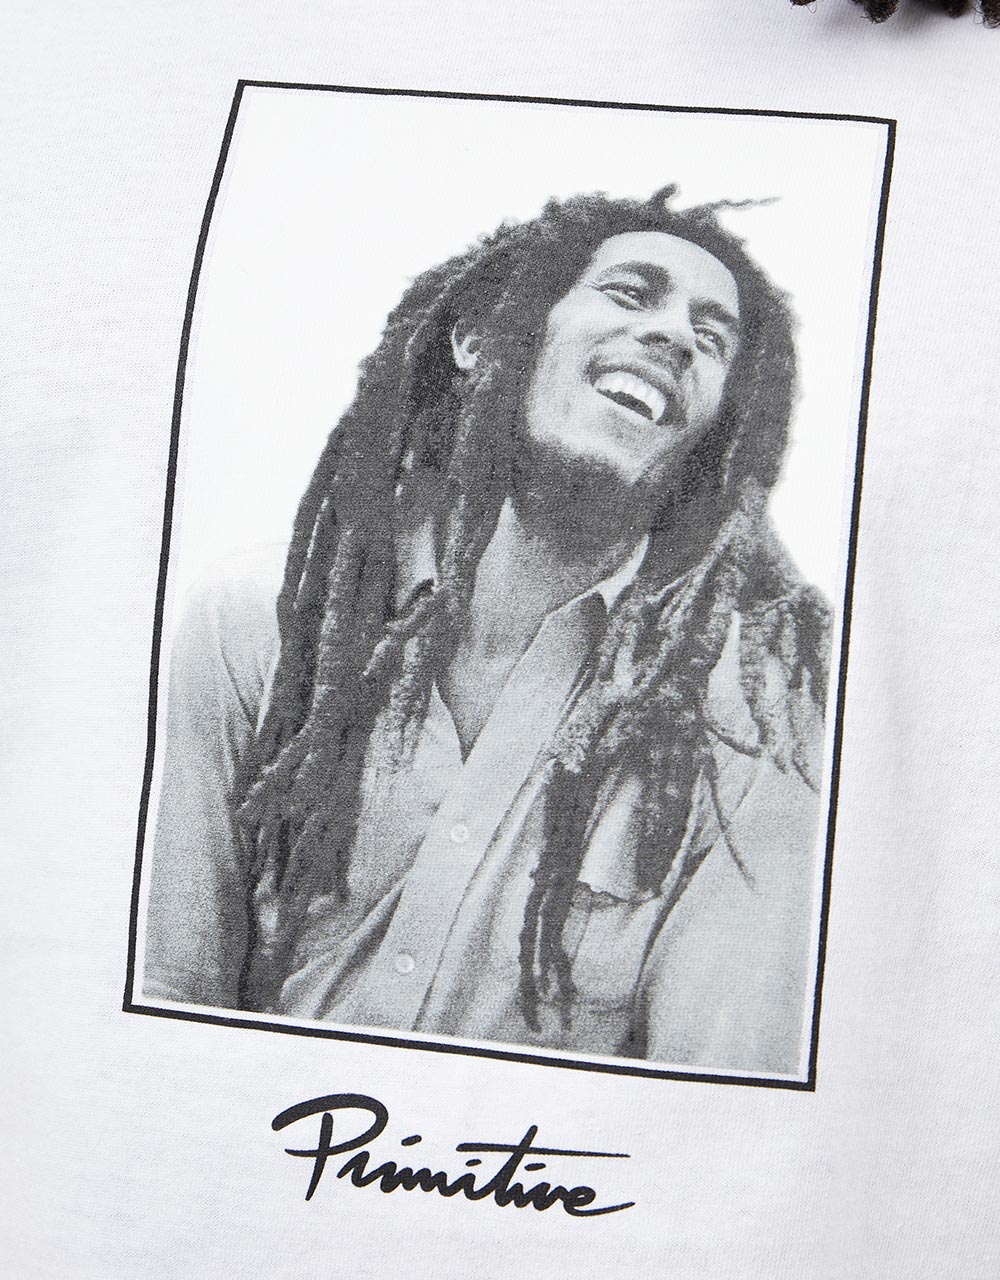 Primitive x Bob Marley Uprising T-Shirt - White